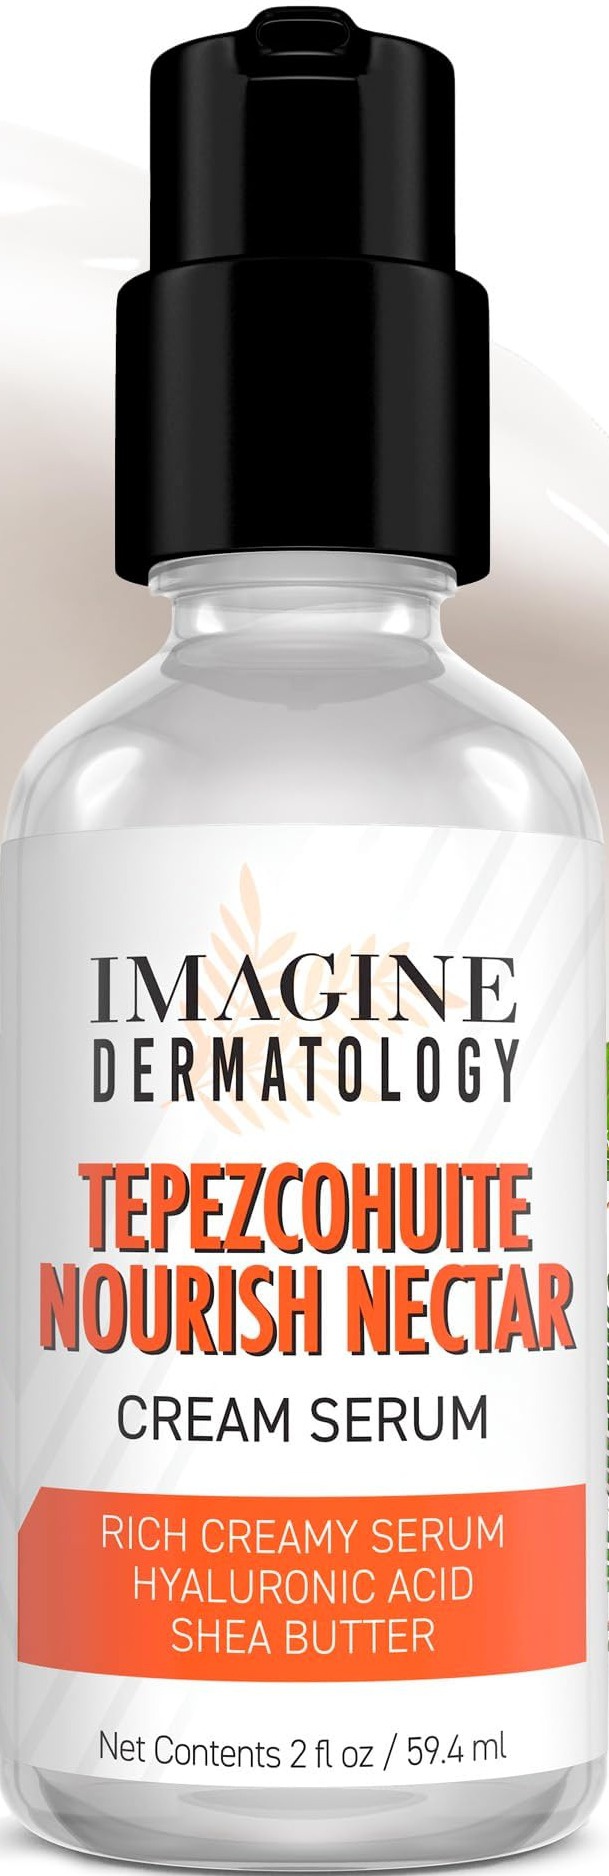 Imagine Dermatology Tepezcohuite Nourish Nectar Cream Serum